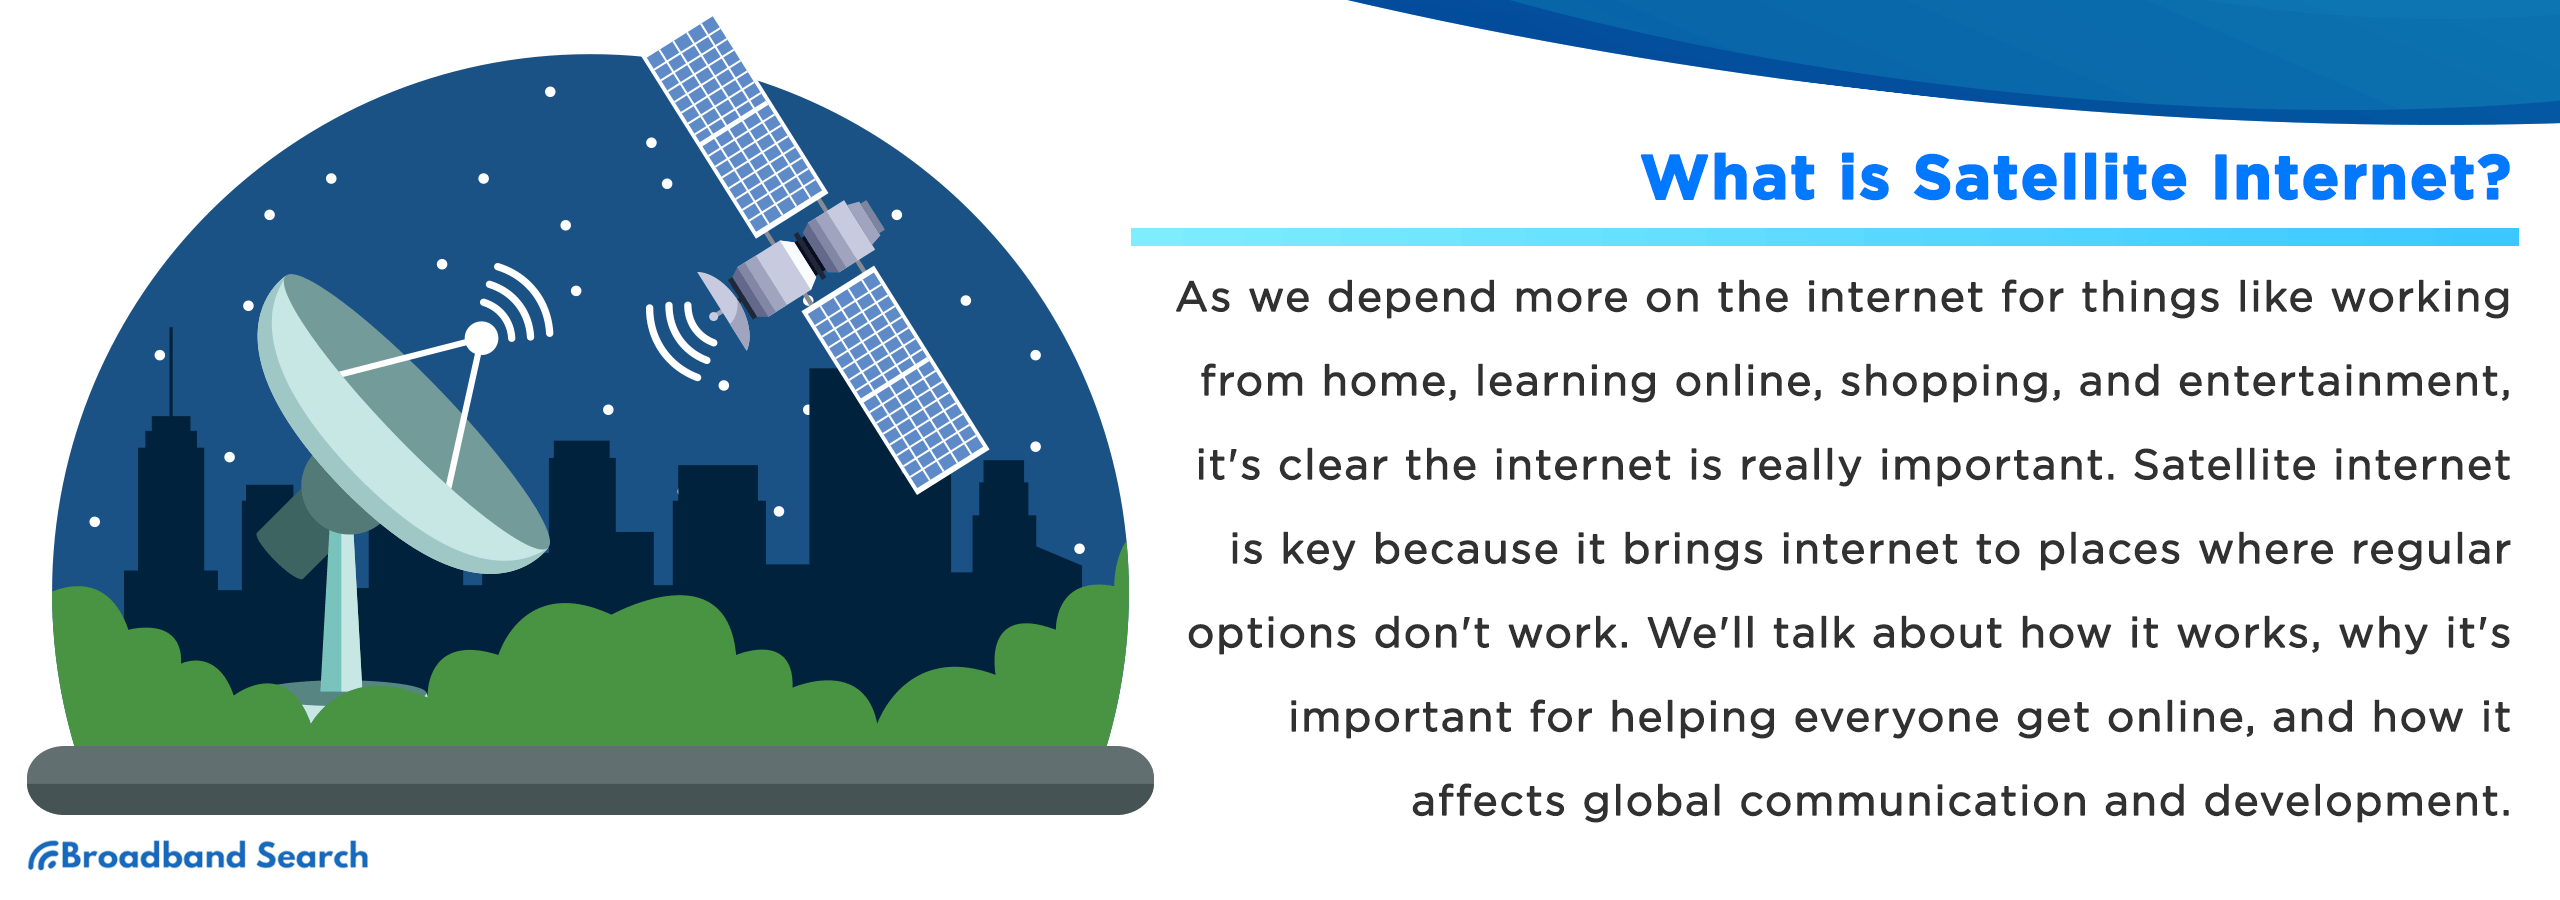 What is Satellite Internet?